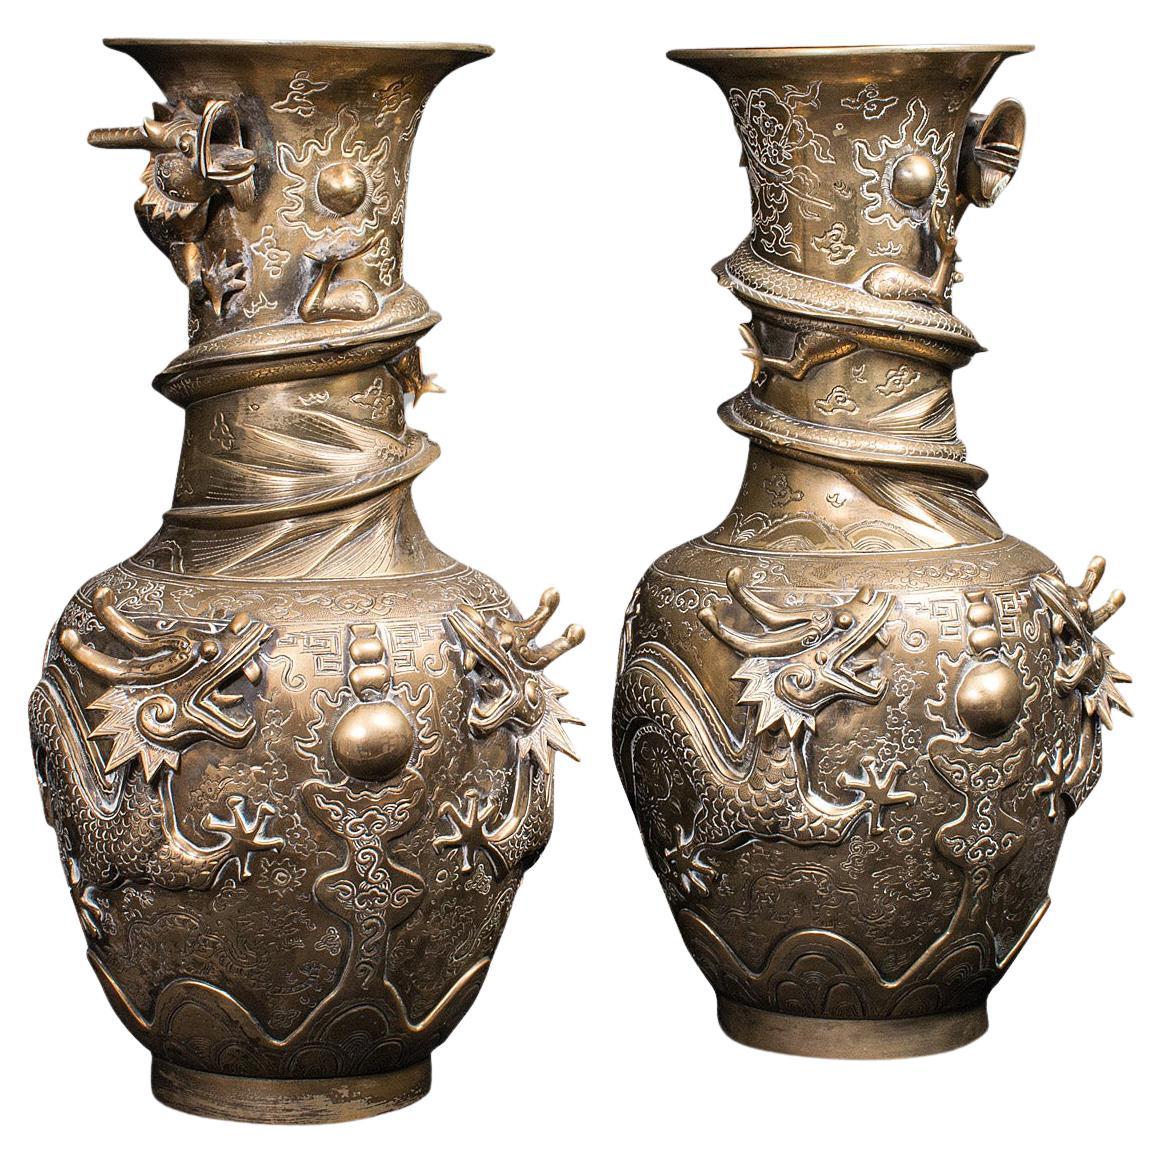 Pair of Tall Antique Dragon Vases, Chinese, Brass, Decorative, Oriental Taste